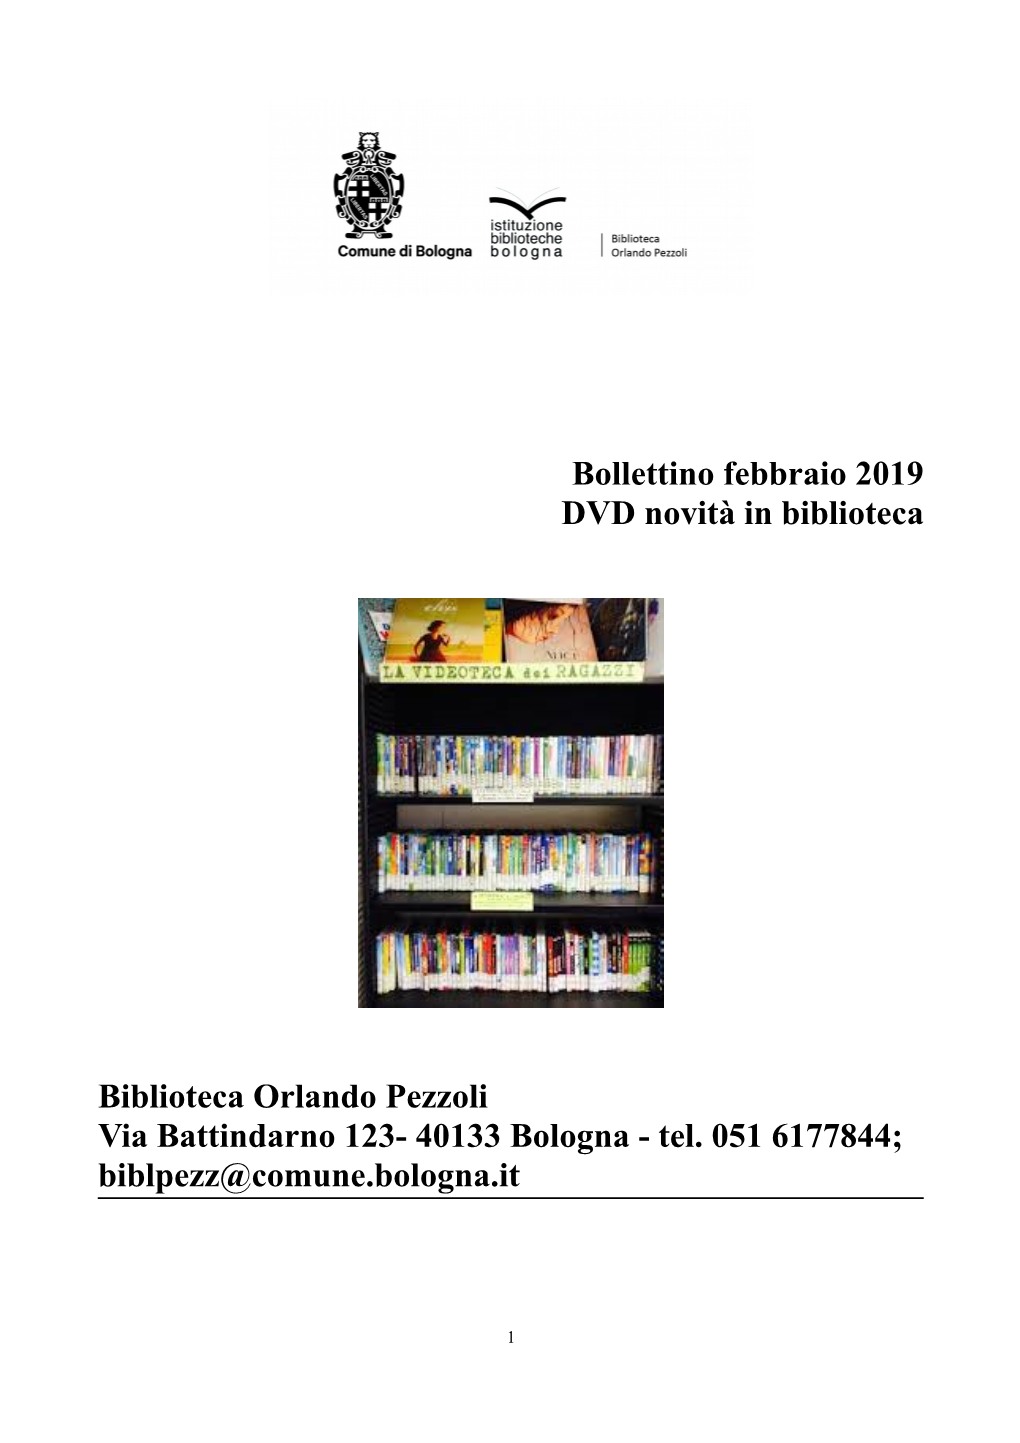 Bollettino Febbraio 2019 DVD Novità in Biblioteca Biblioteca Orlando